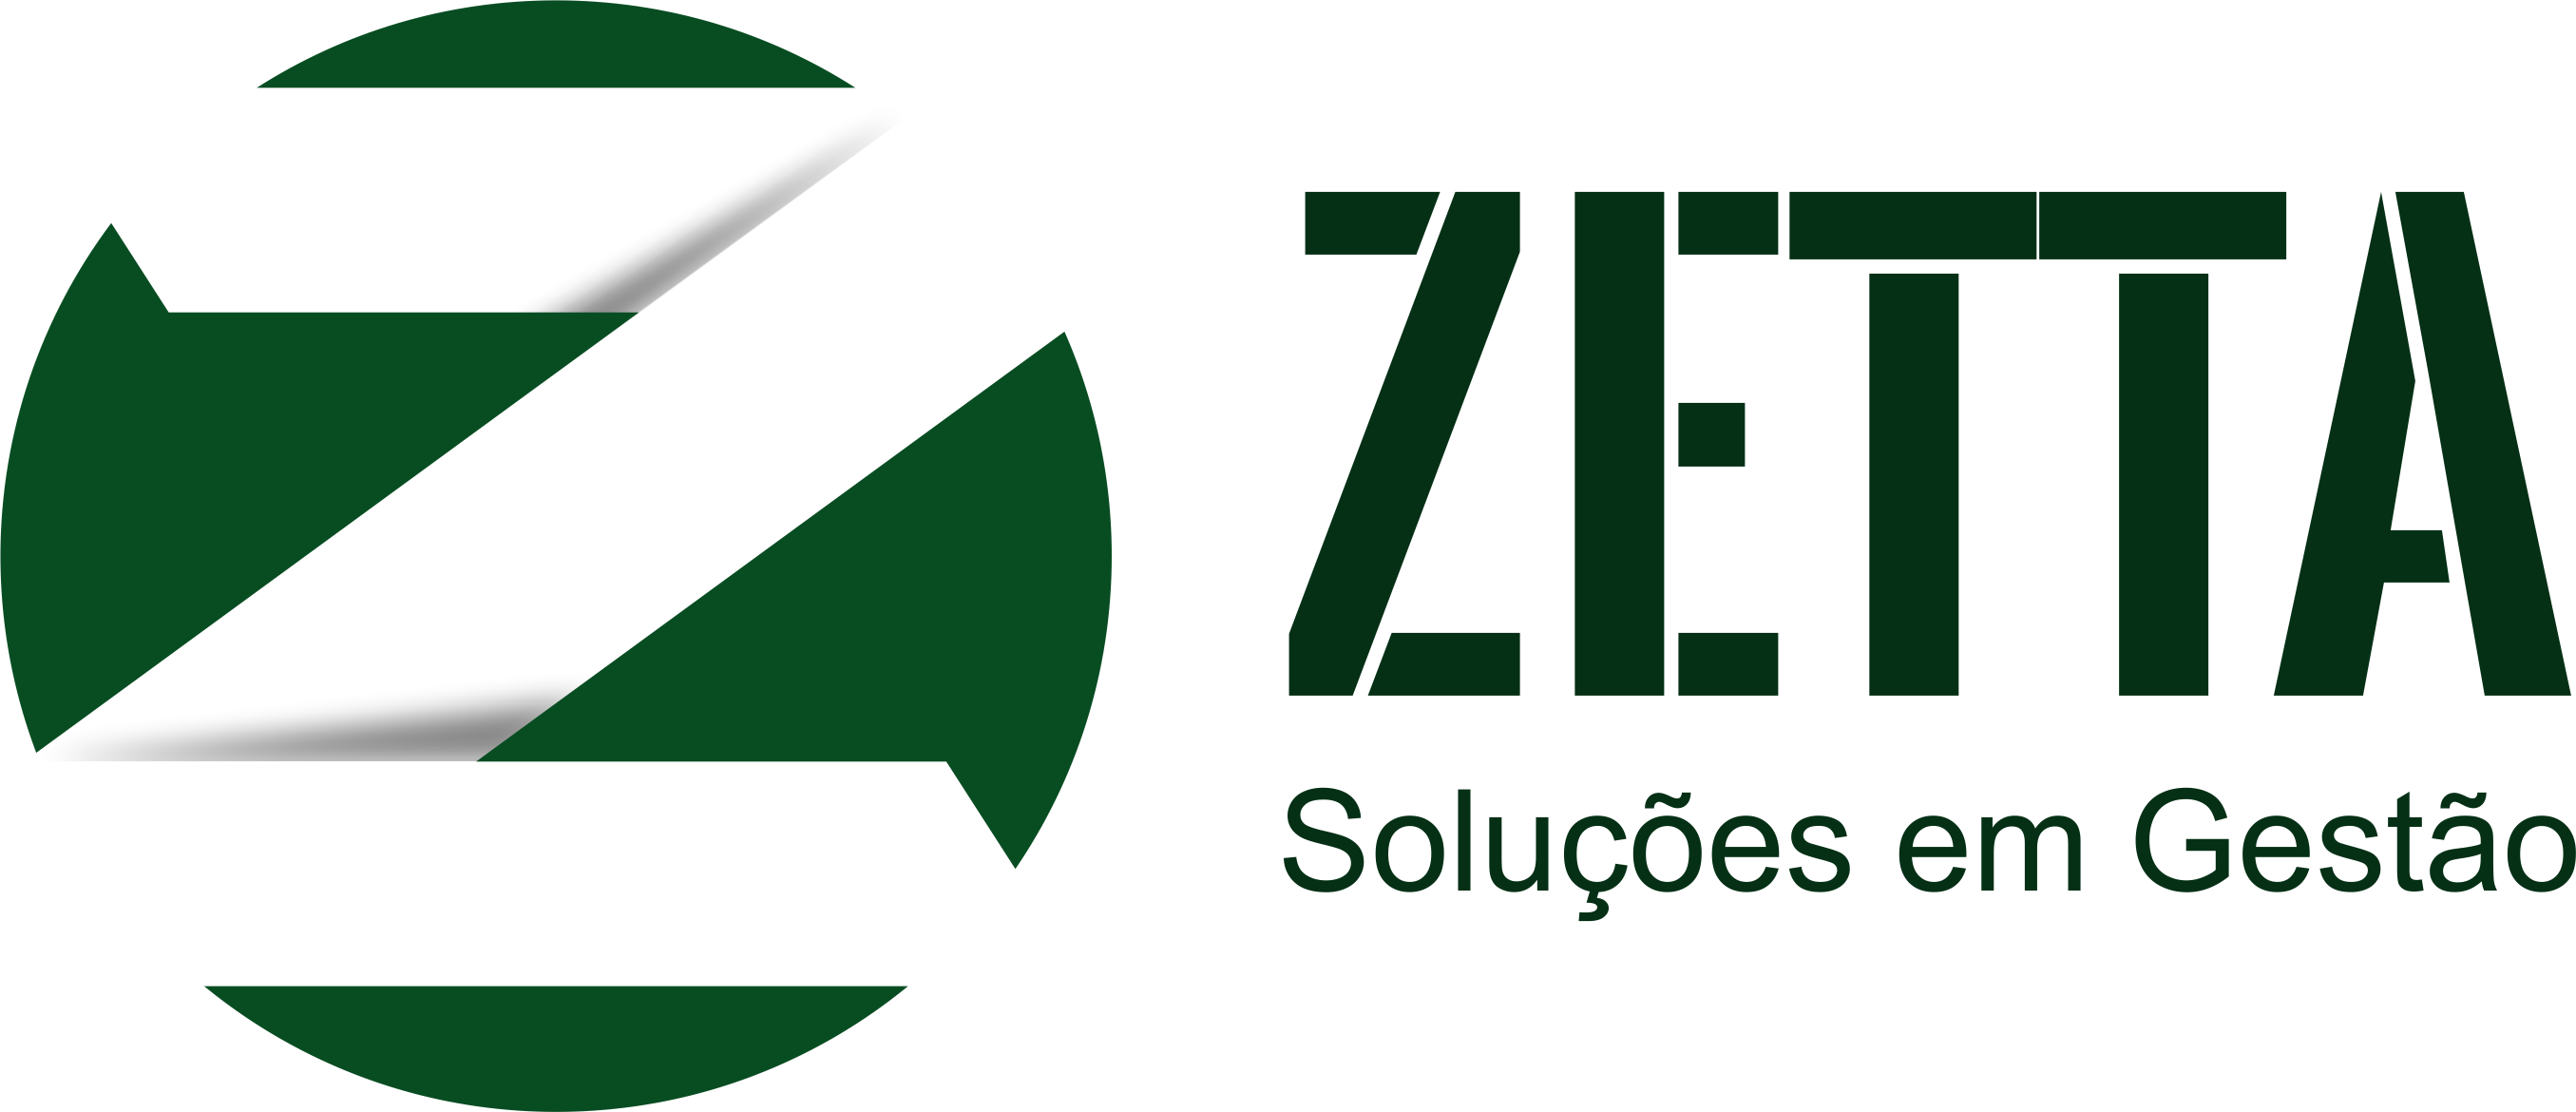 Logo da Zetta